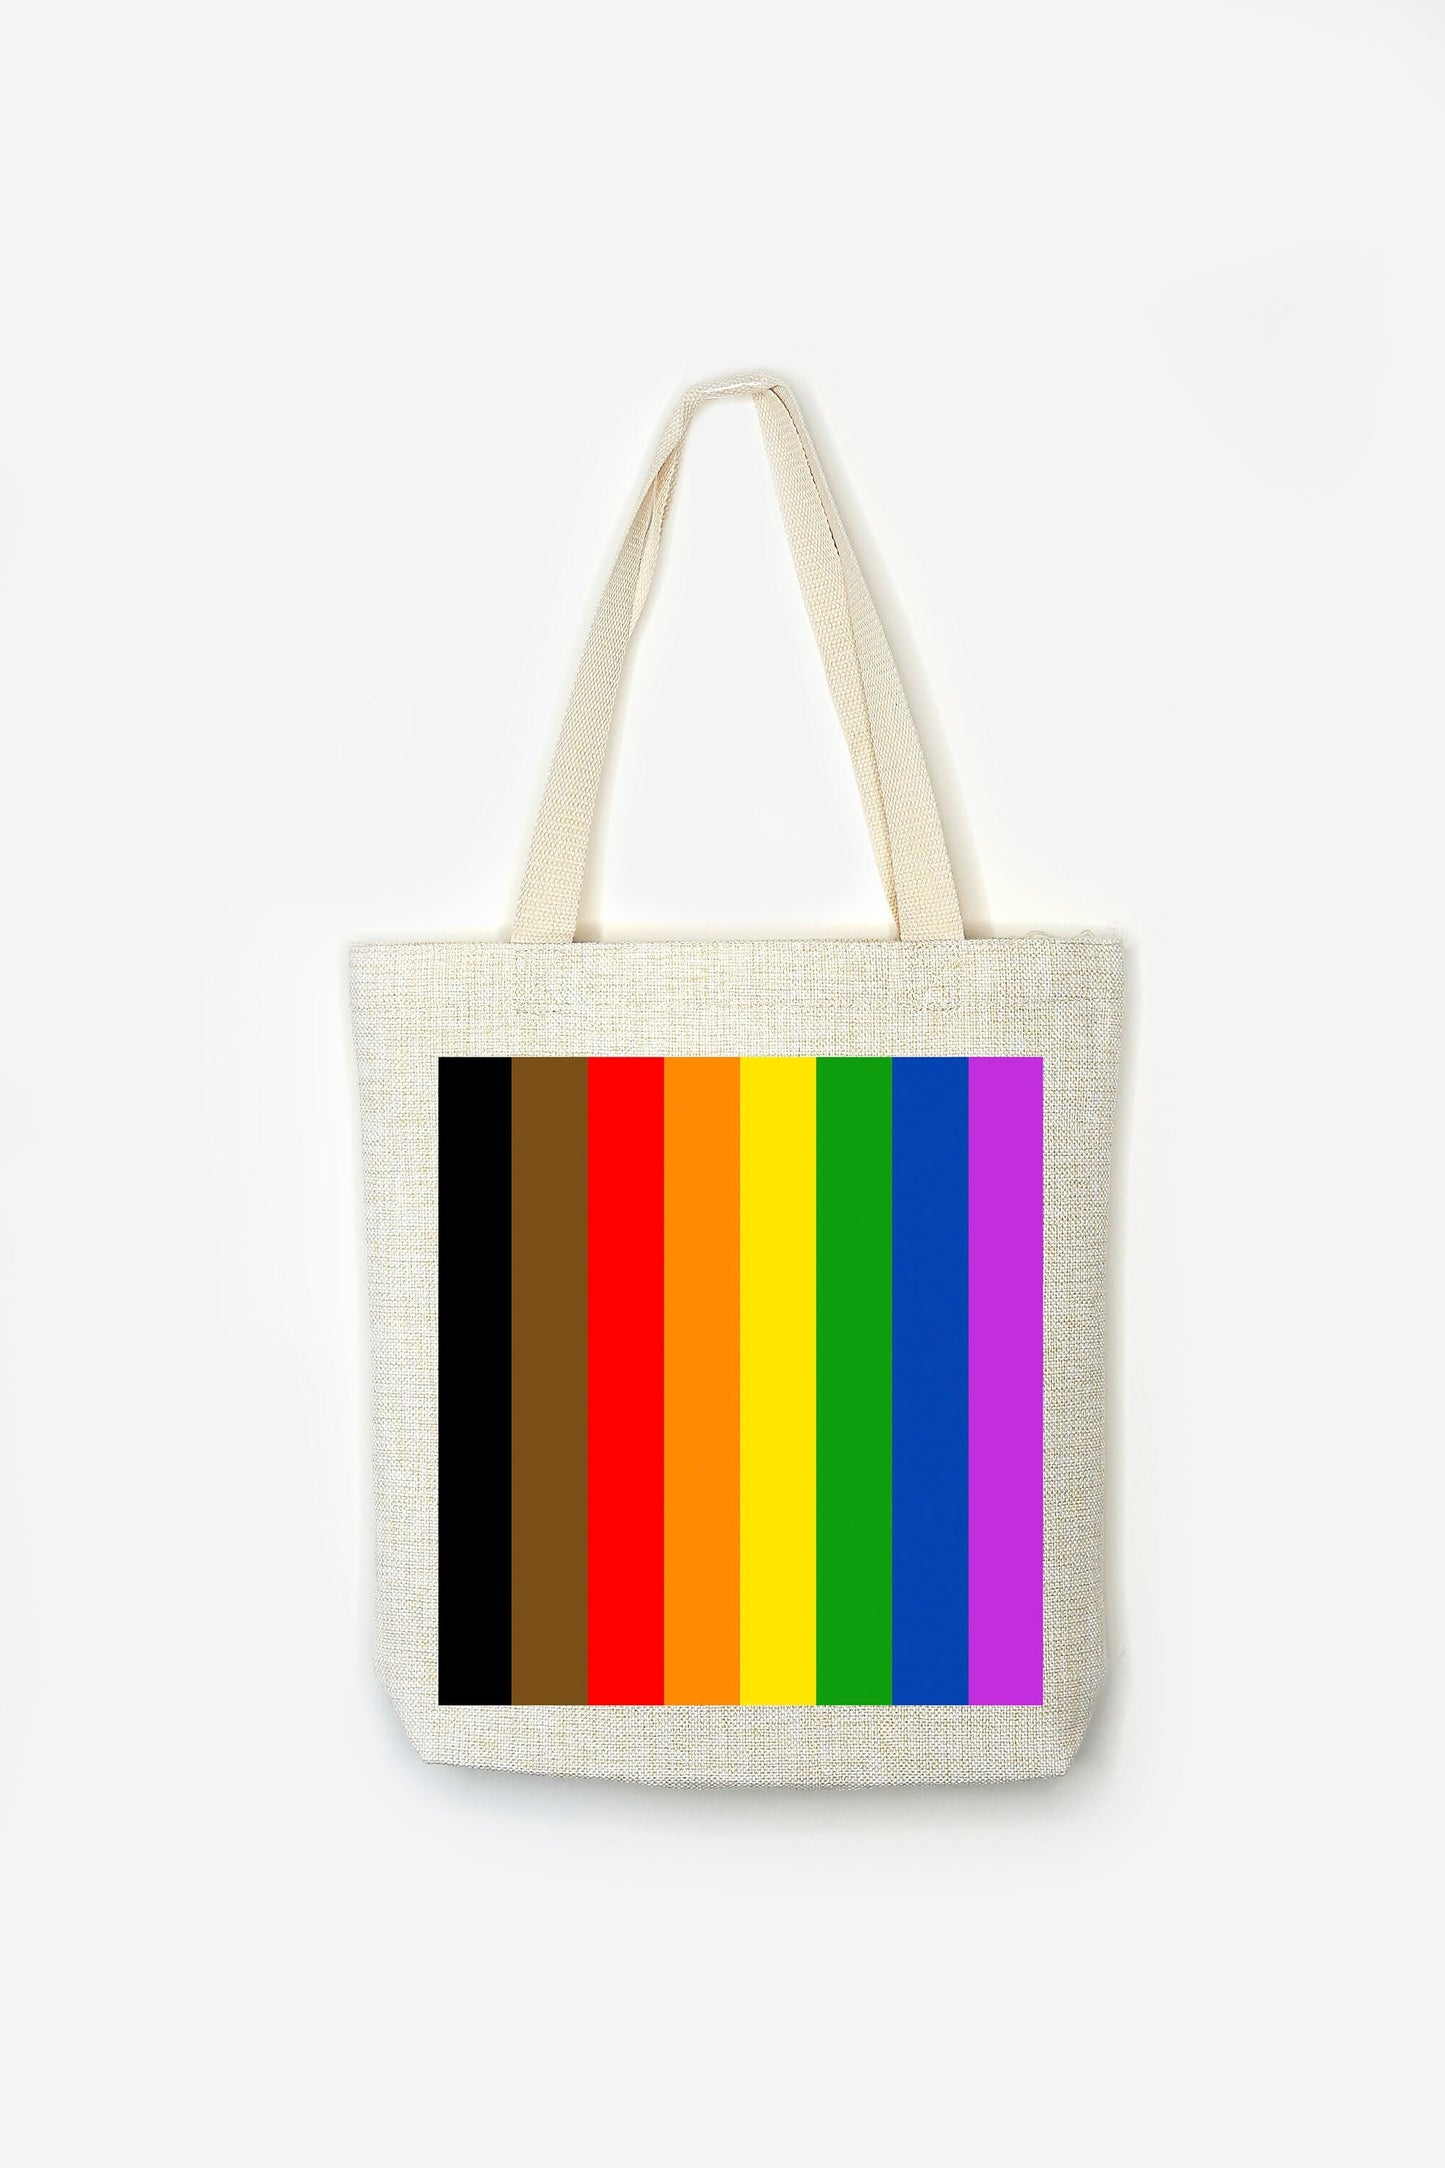 Rainbow Flag Tote Bag - Premium Linen Cotton Canvas - Inclusive BLM Pride Flag LGBT Gay Lesbian Bi Transgender - Festival Merch